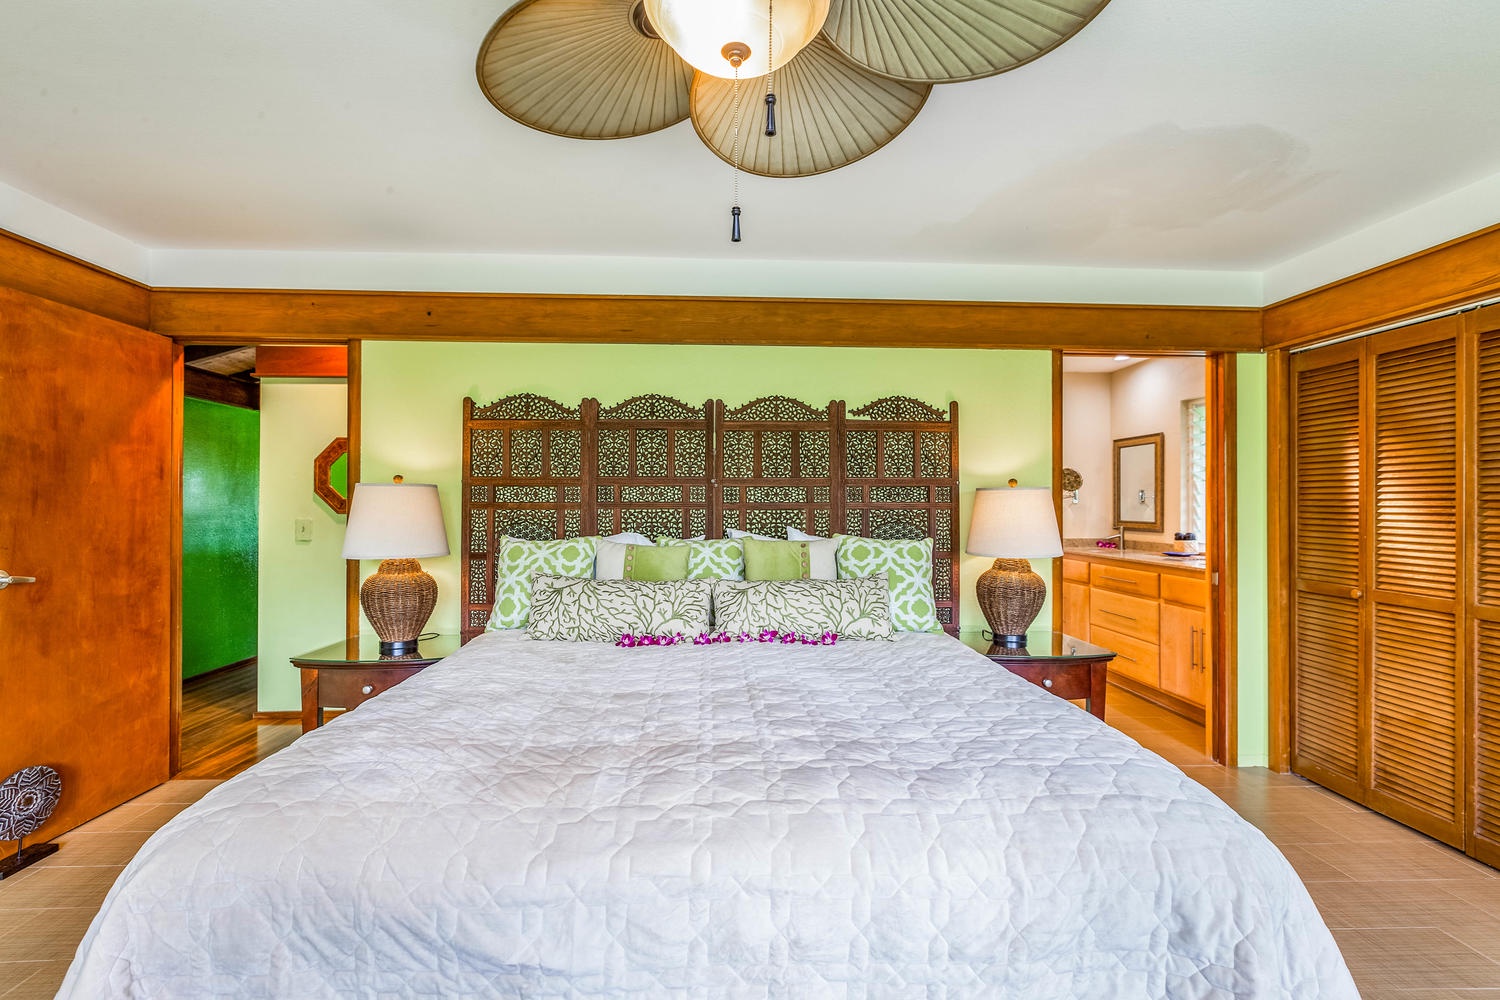 Princeville Vacation Rentals, Hale Anu Keanu - Upstairs Primary bedroom